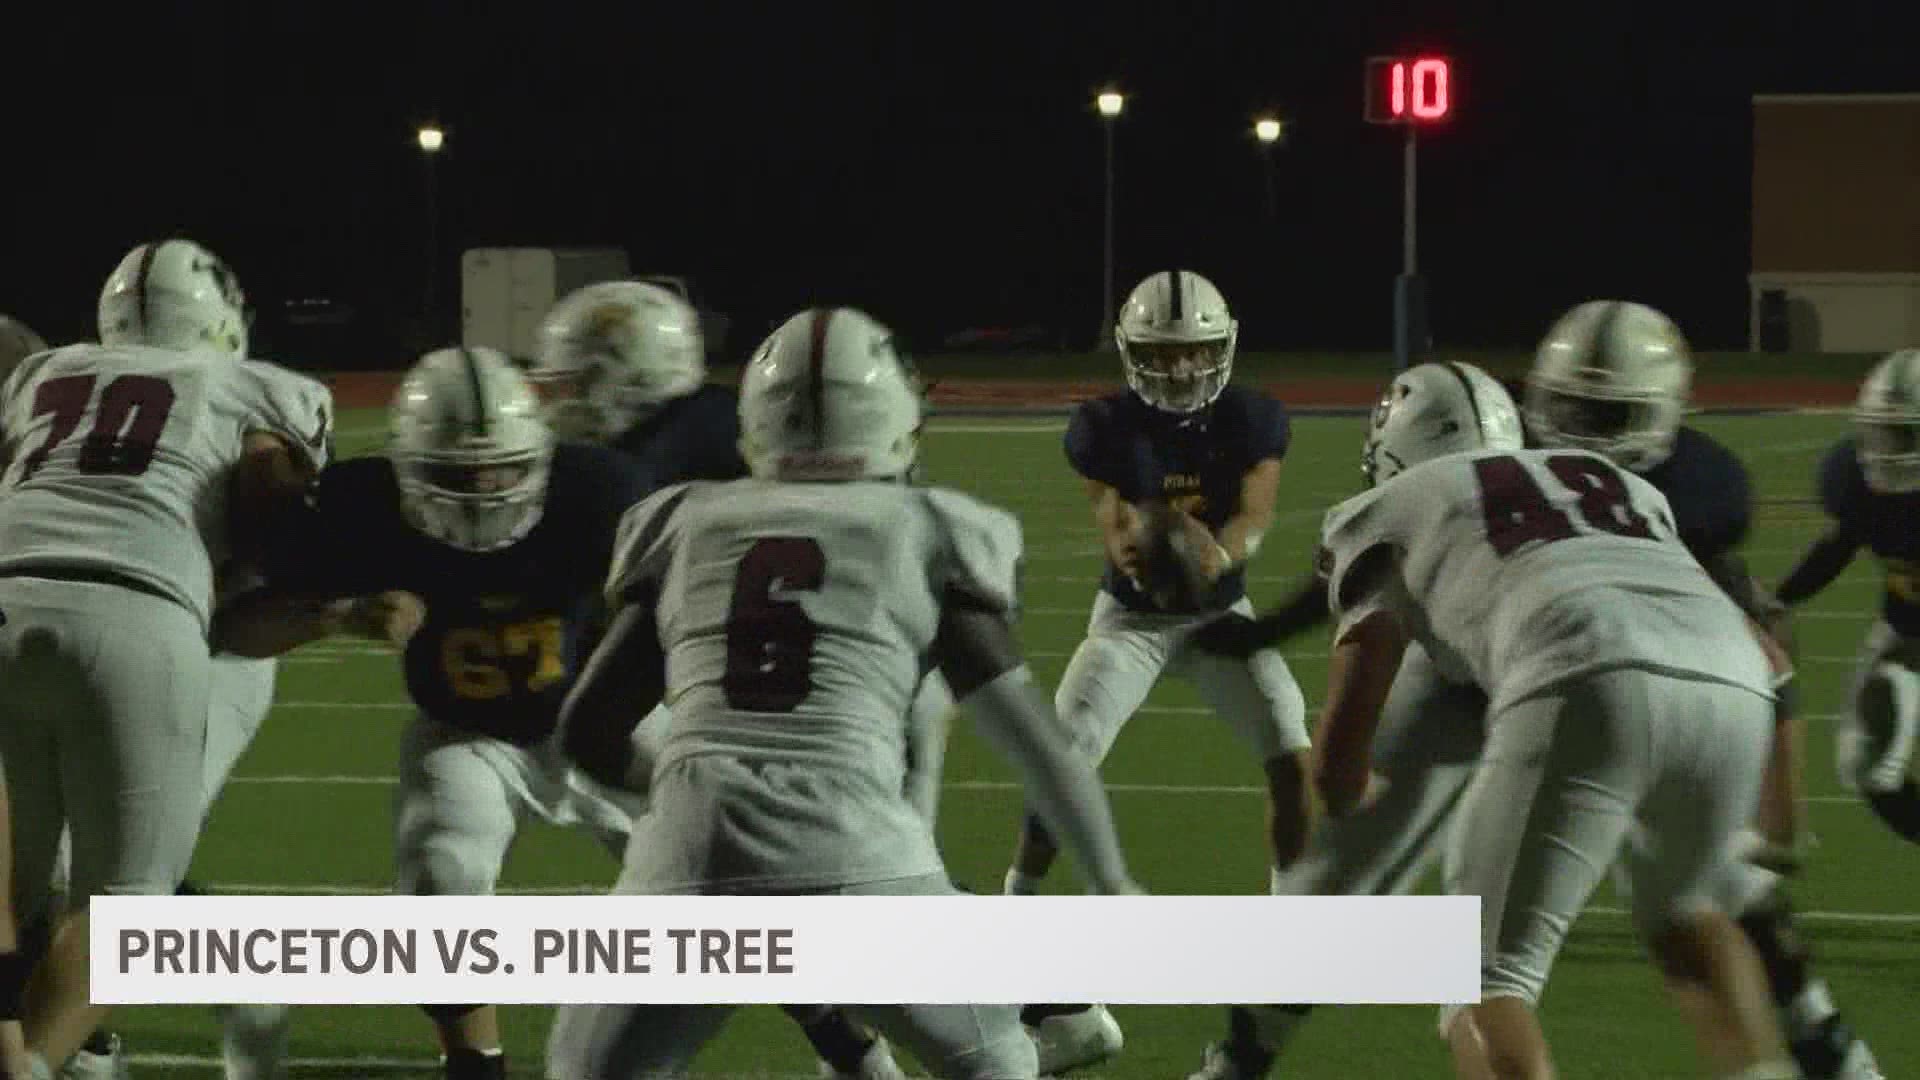 Pine Tree defeated Princeton by score o 55-30.